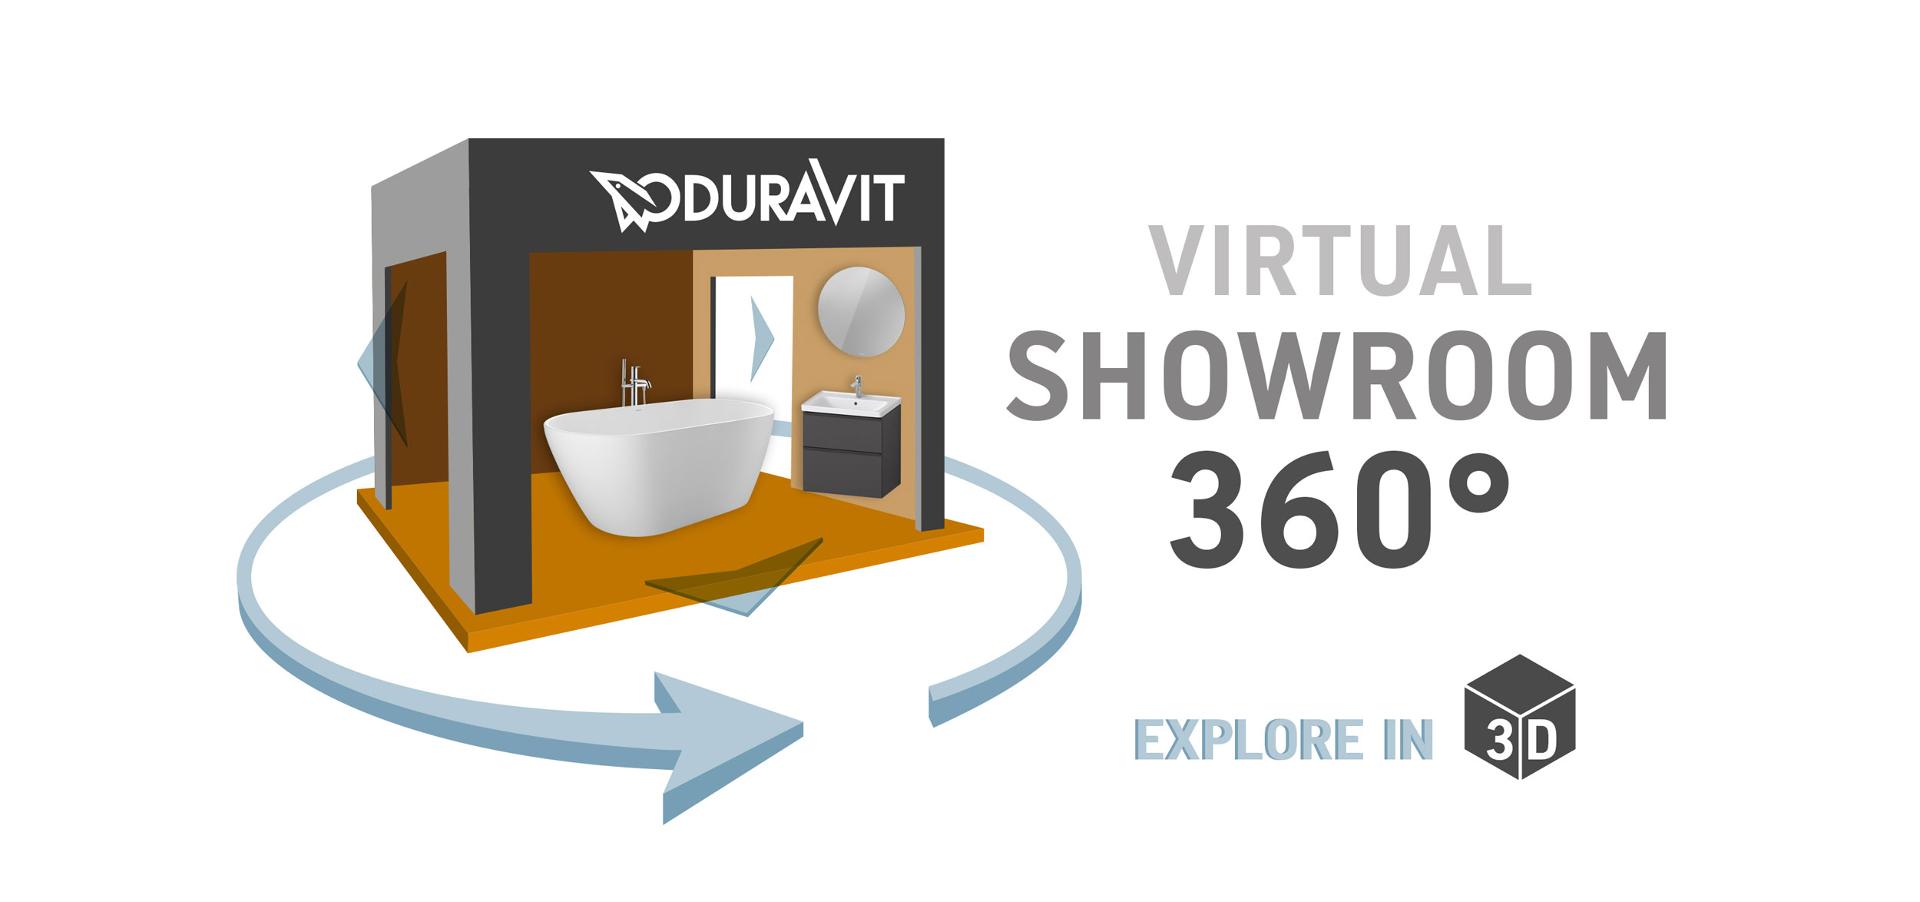 Duravit virtual showroom
